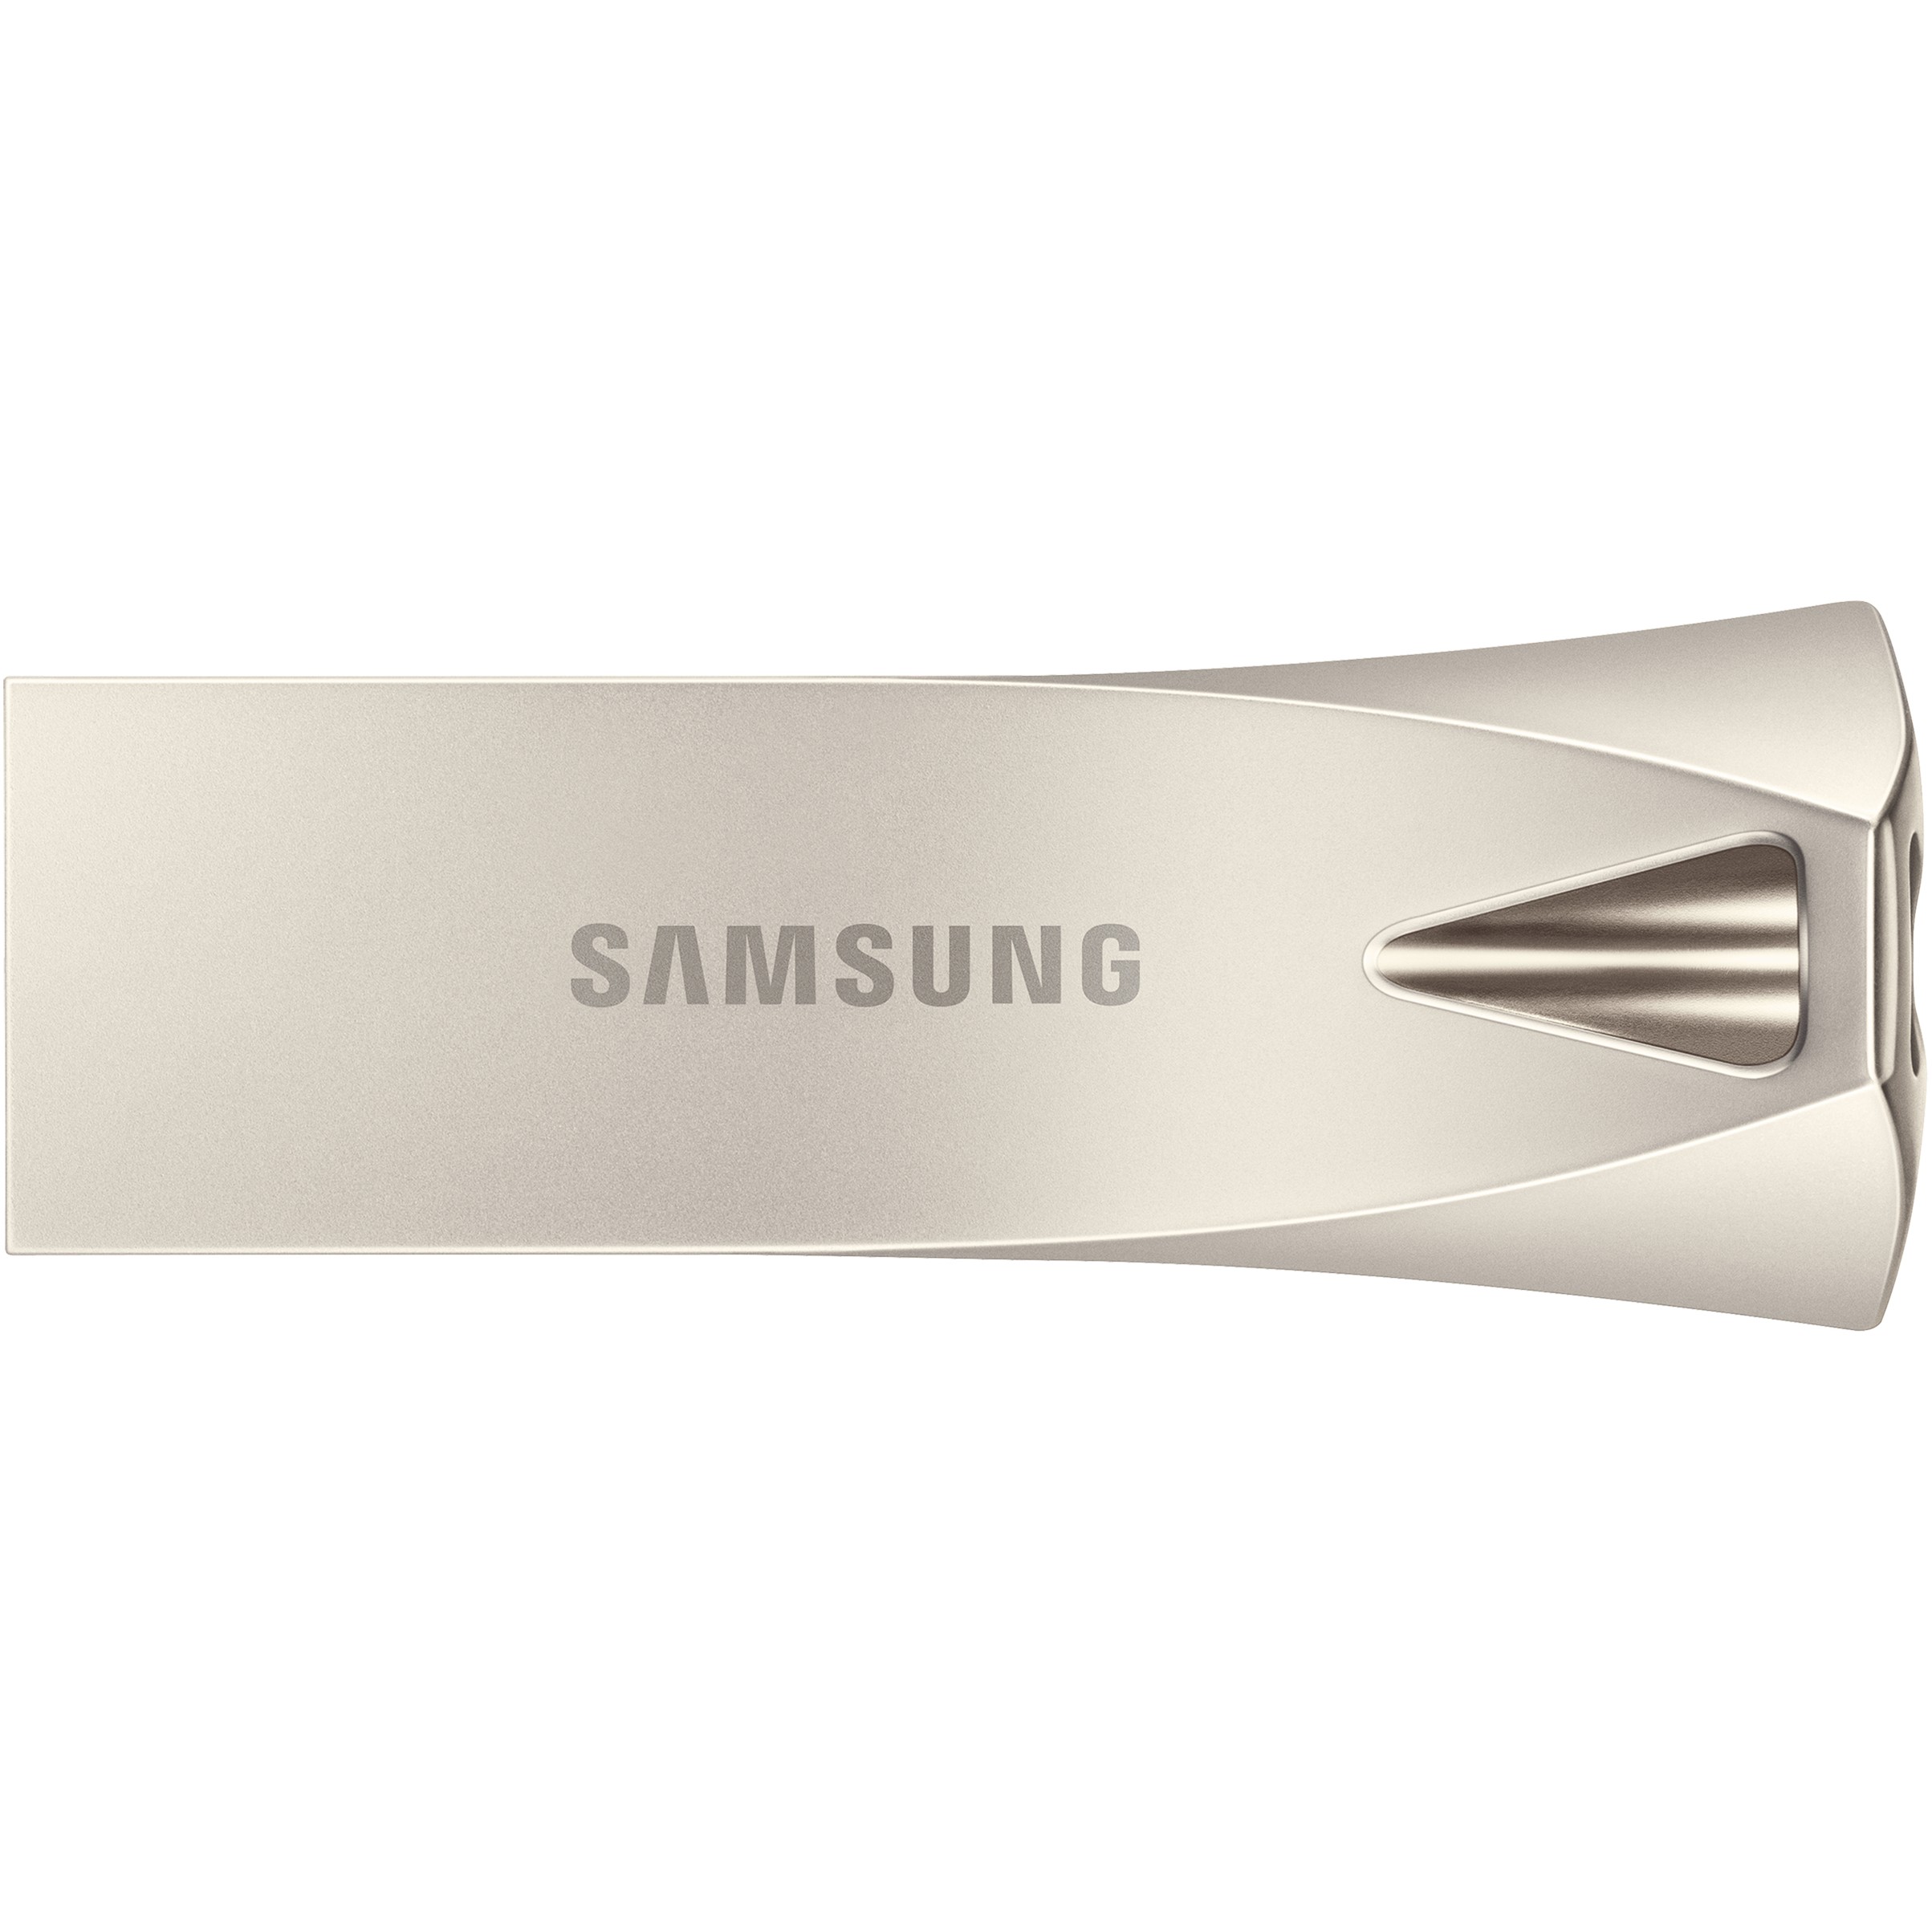 Samsung MUF-64BE USB flash drive - MUF-64BE3/APC